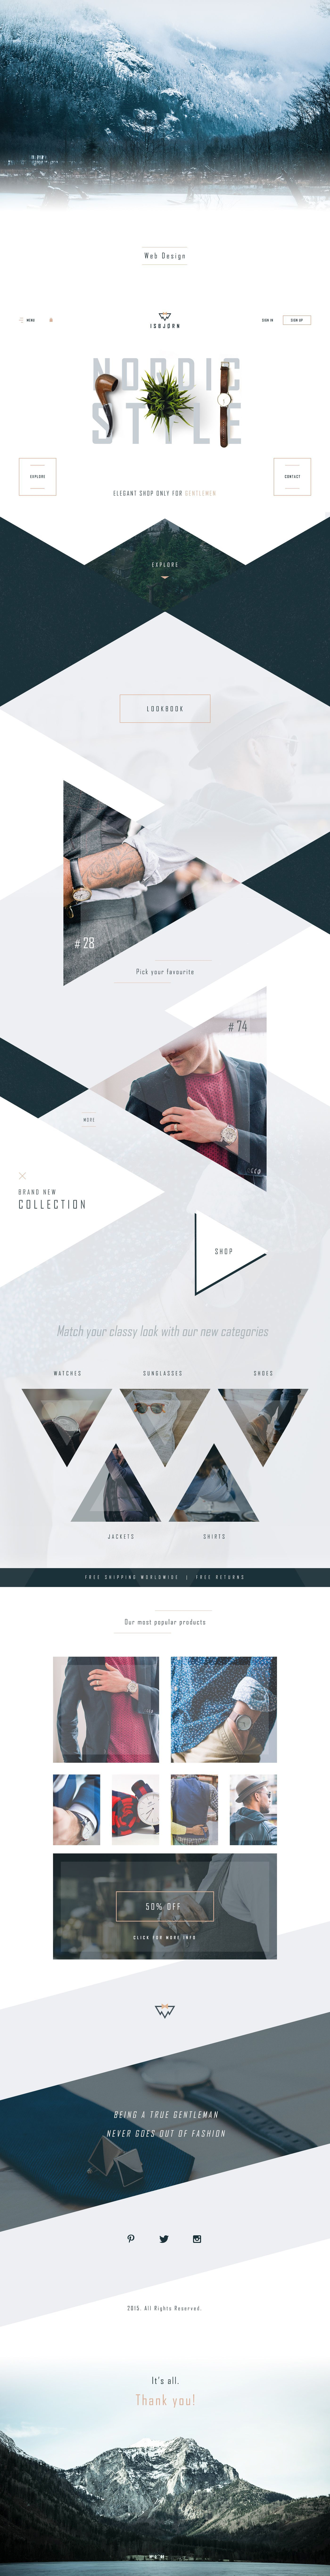 Isbjørn – Gentlemans Store Ui design concept and styling on Behance